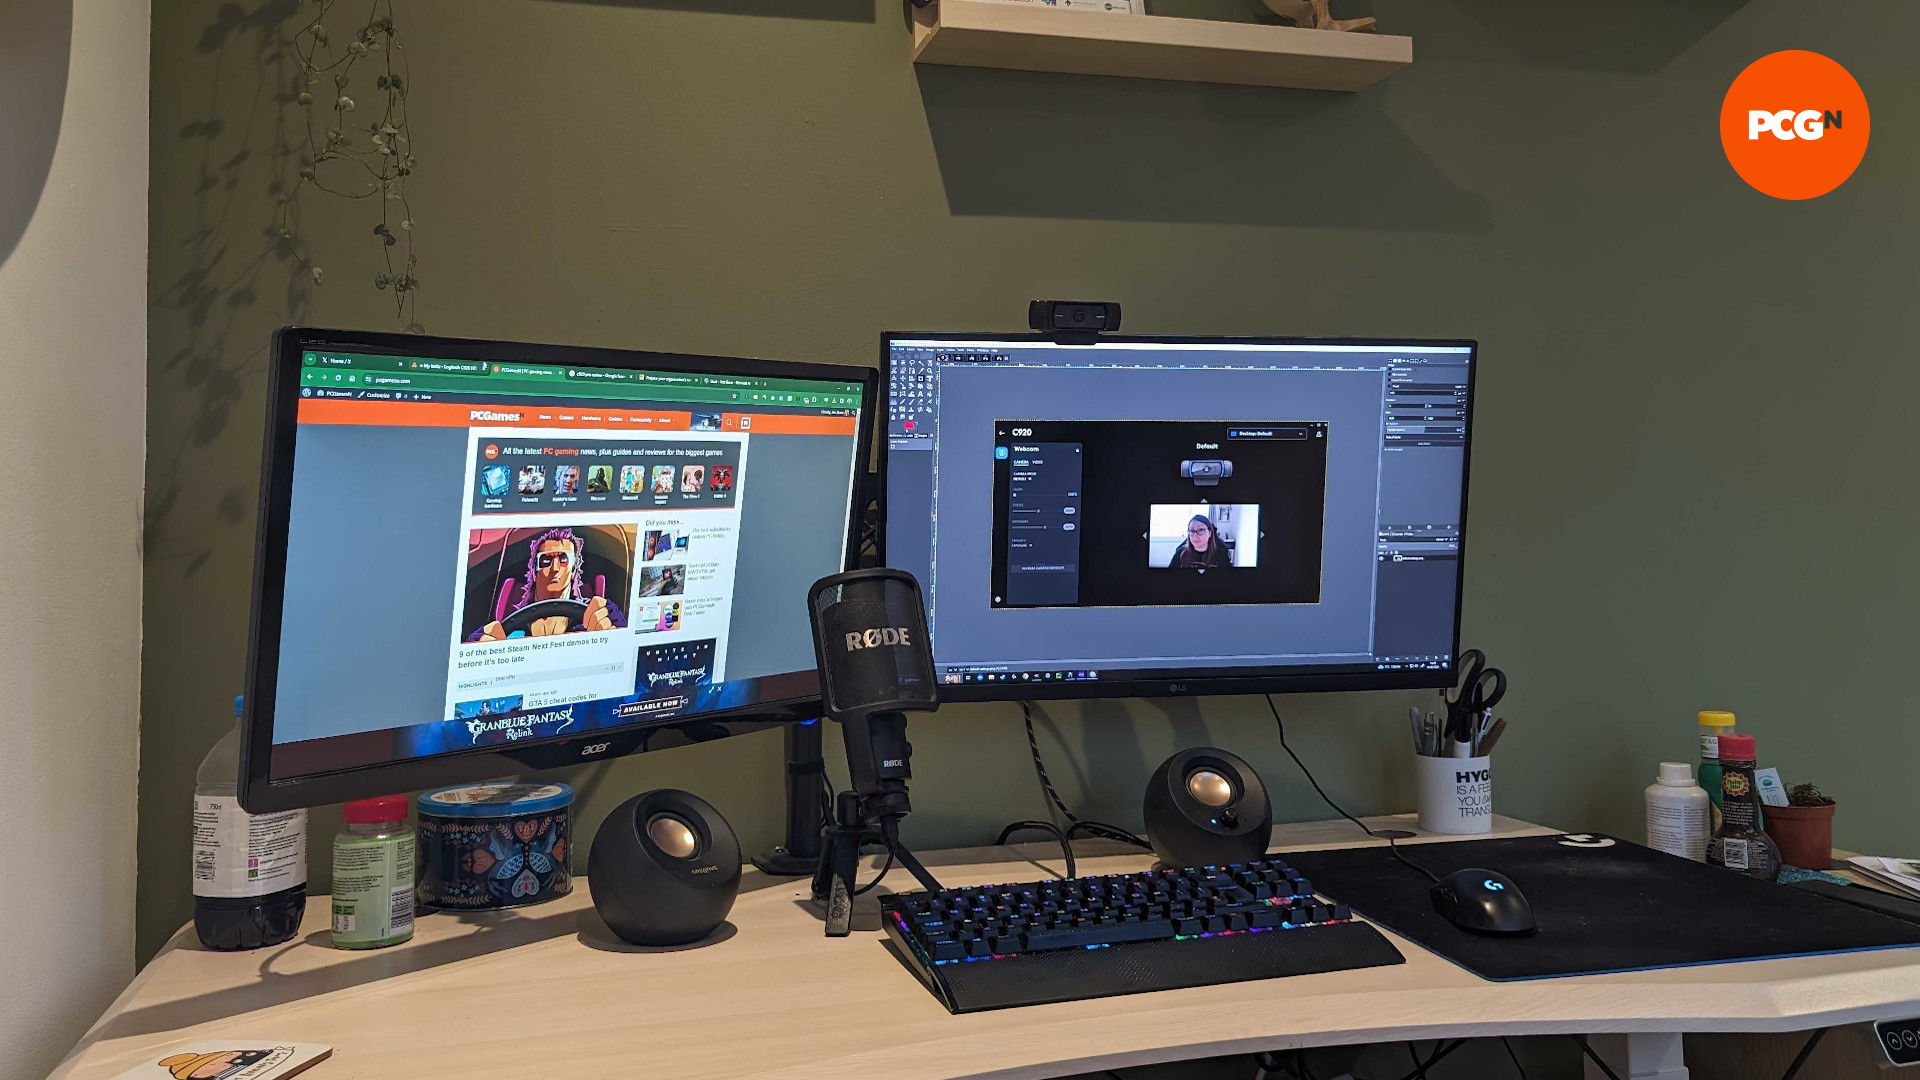 The Logitech C920 HD Pro webcam on a gaming desk setup